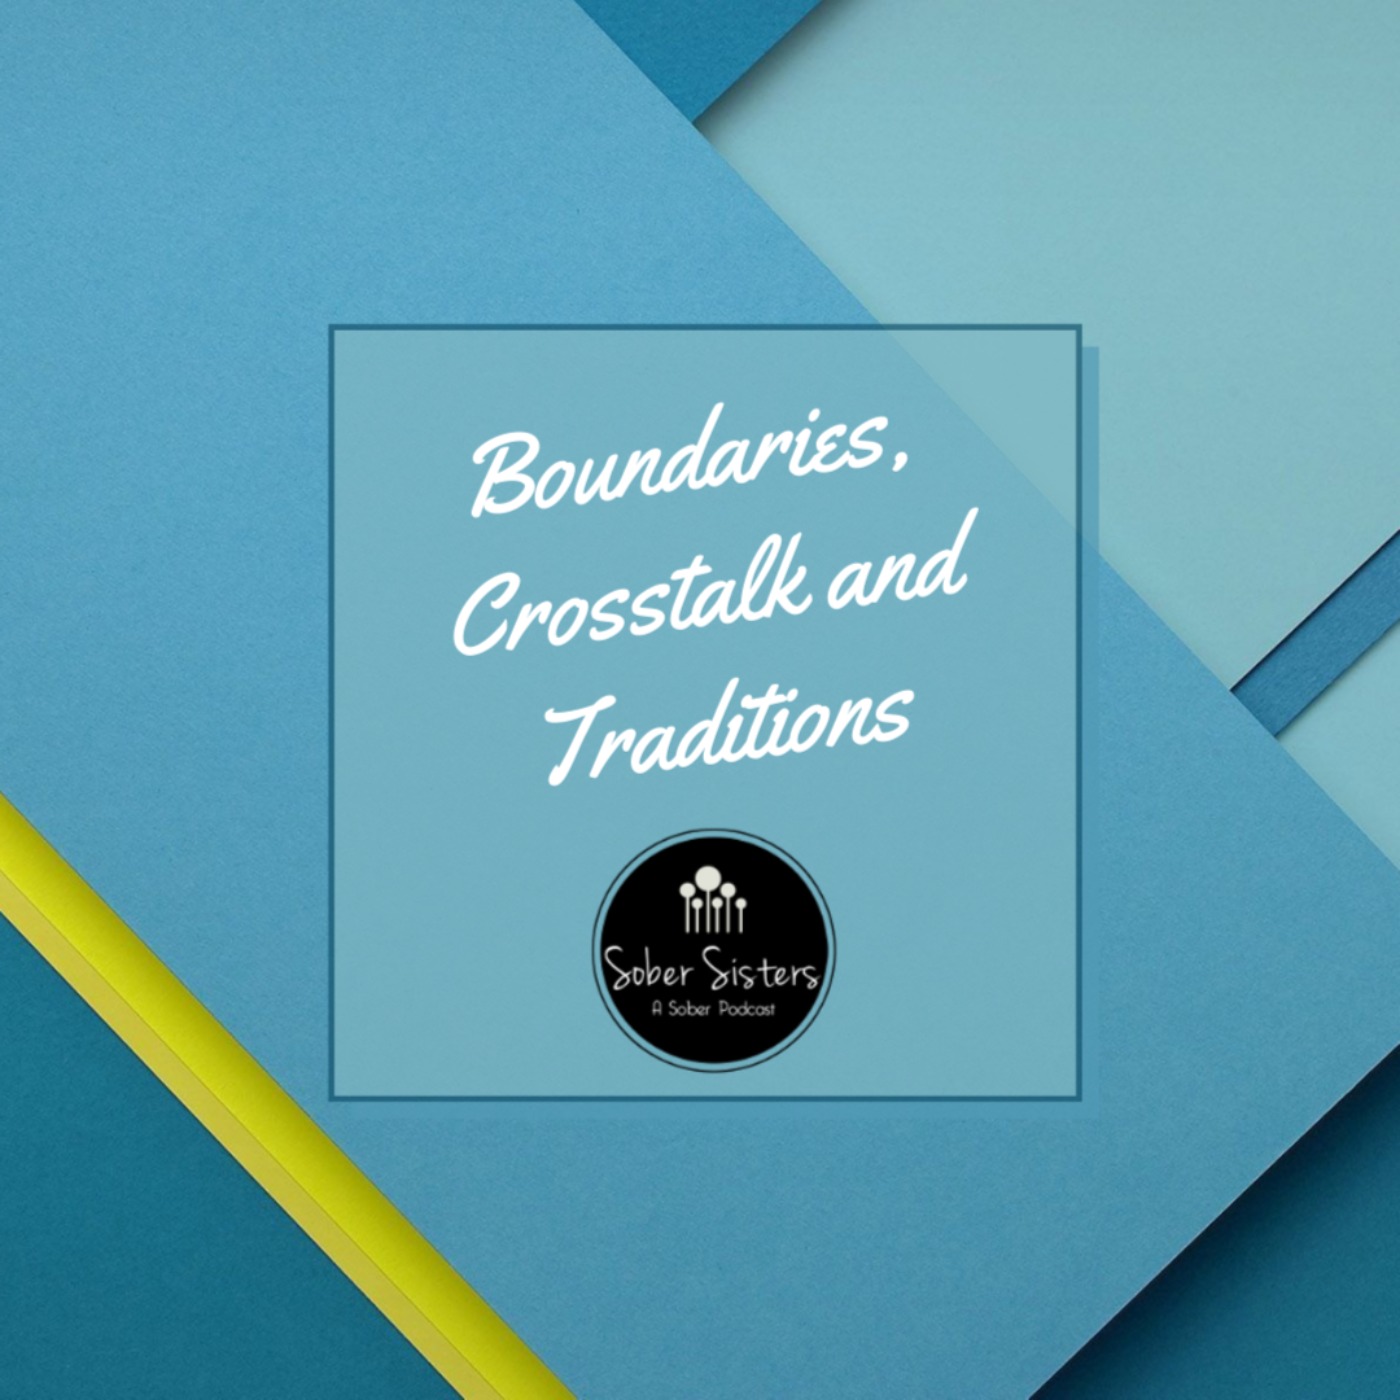 Boundaries, Crosstalk and Traditions